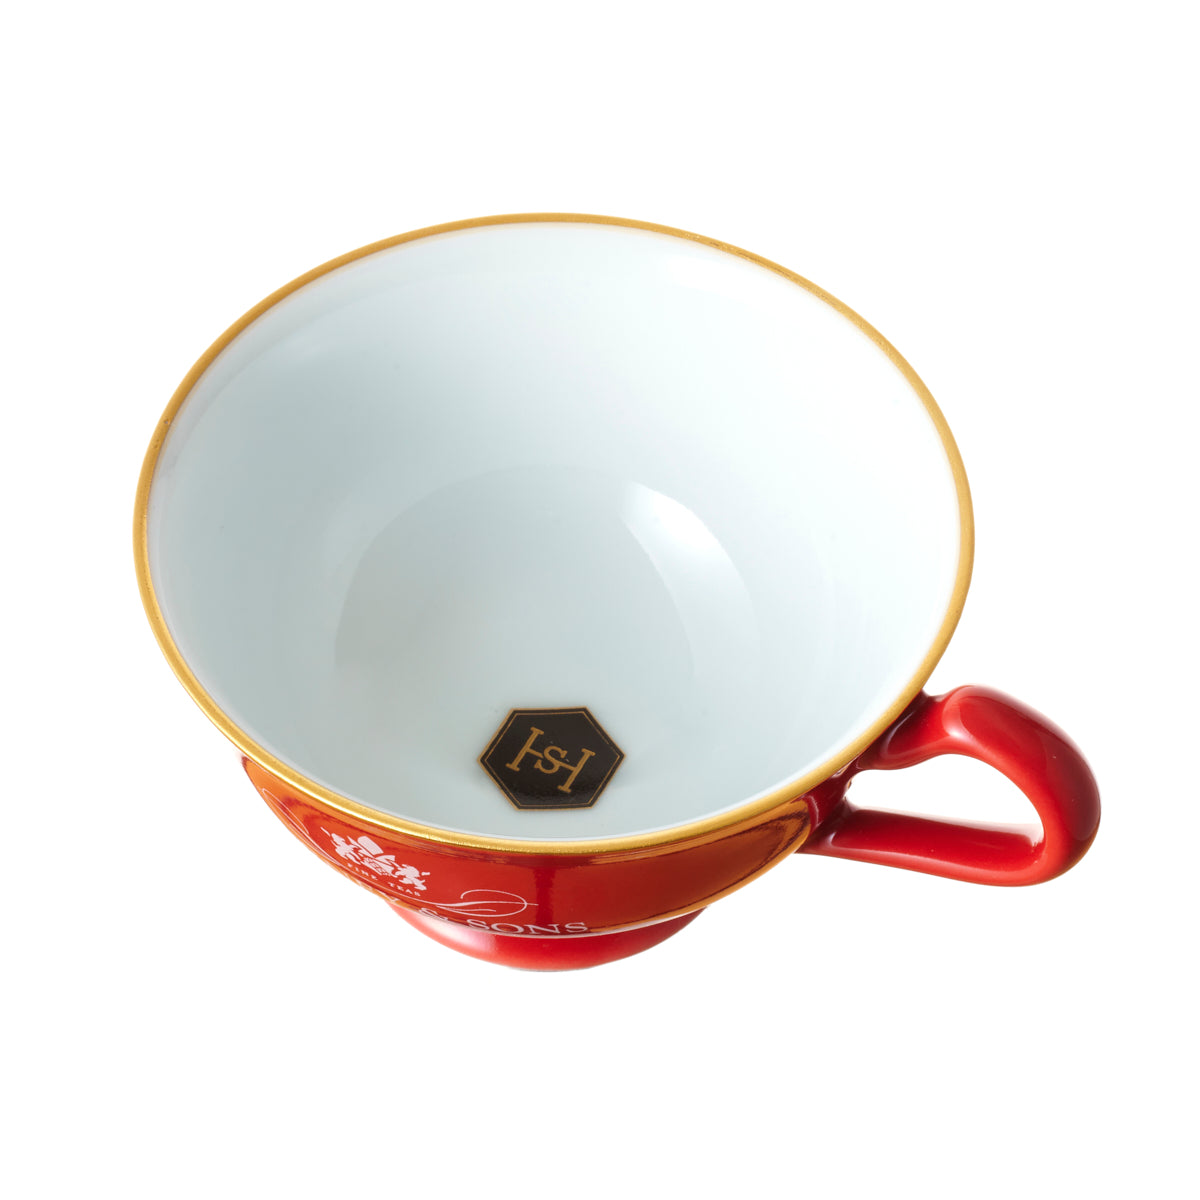 【HARNEY & SONS × ARITA PORCELAIN LAB】 Tea Cup & Saucer ティーカップ & ソーサー （Red）